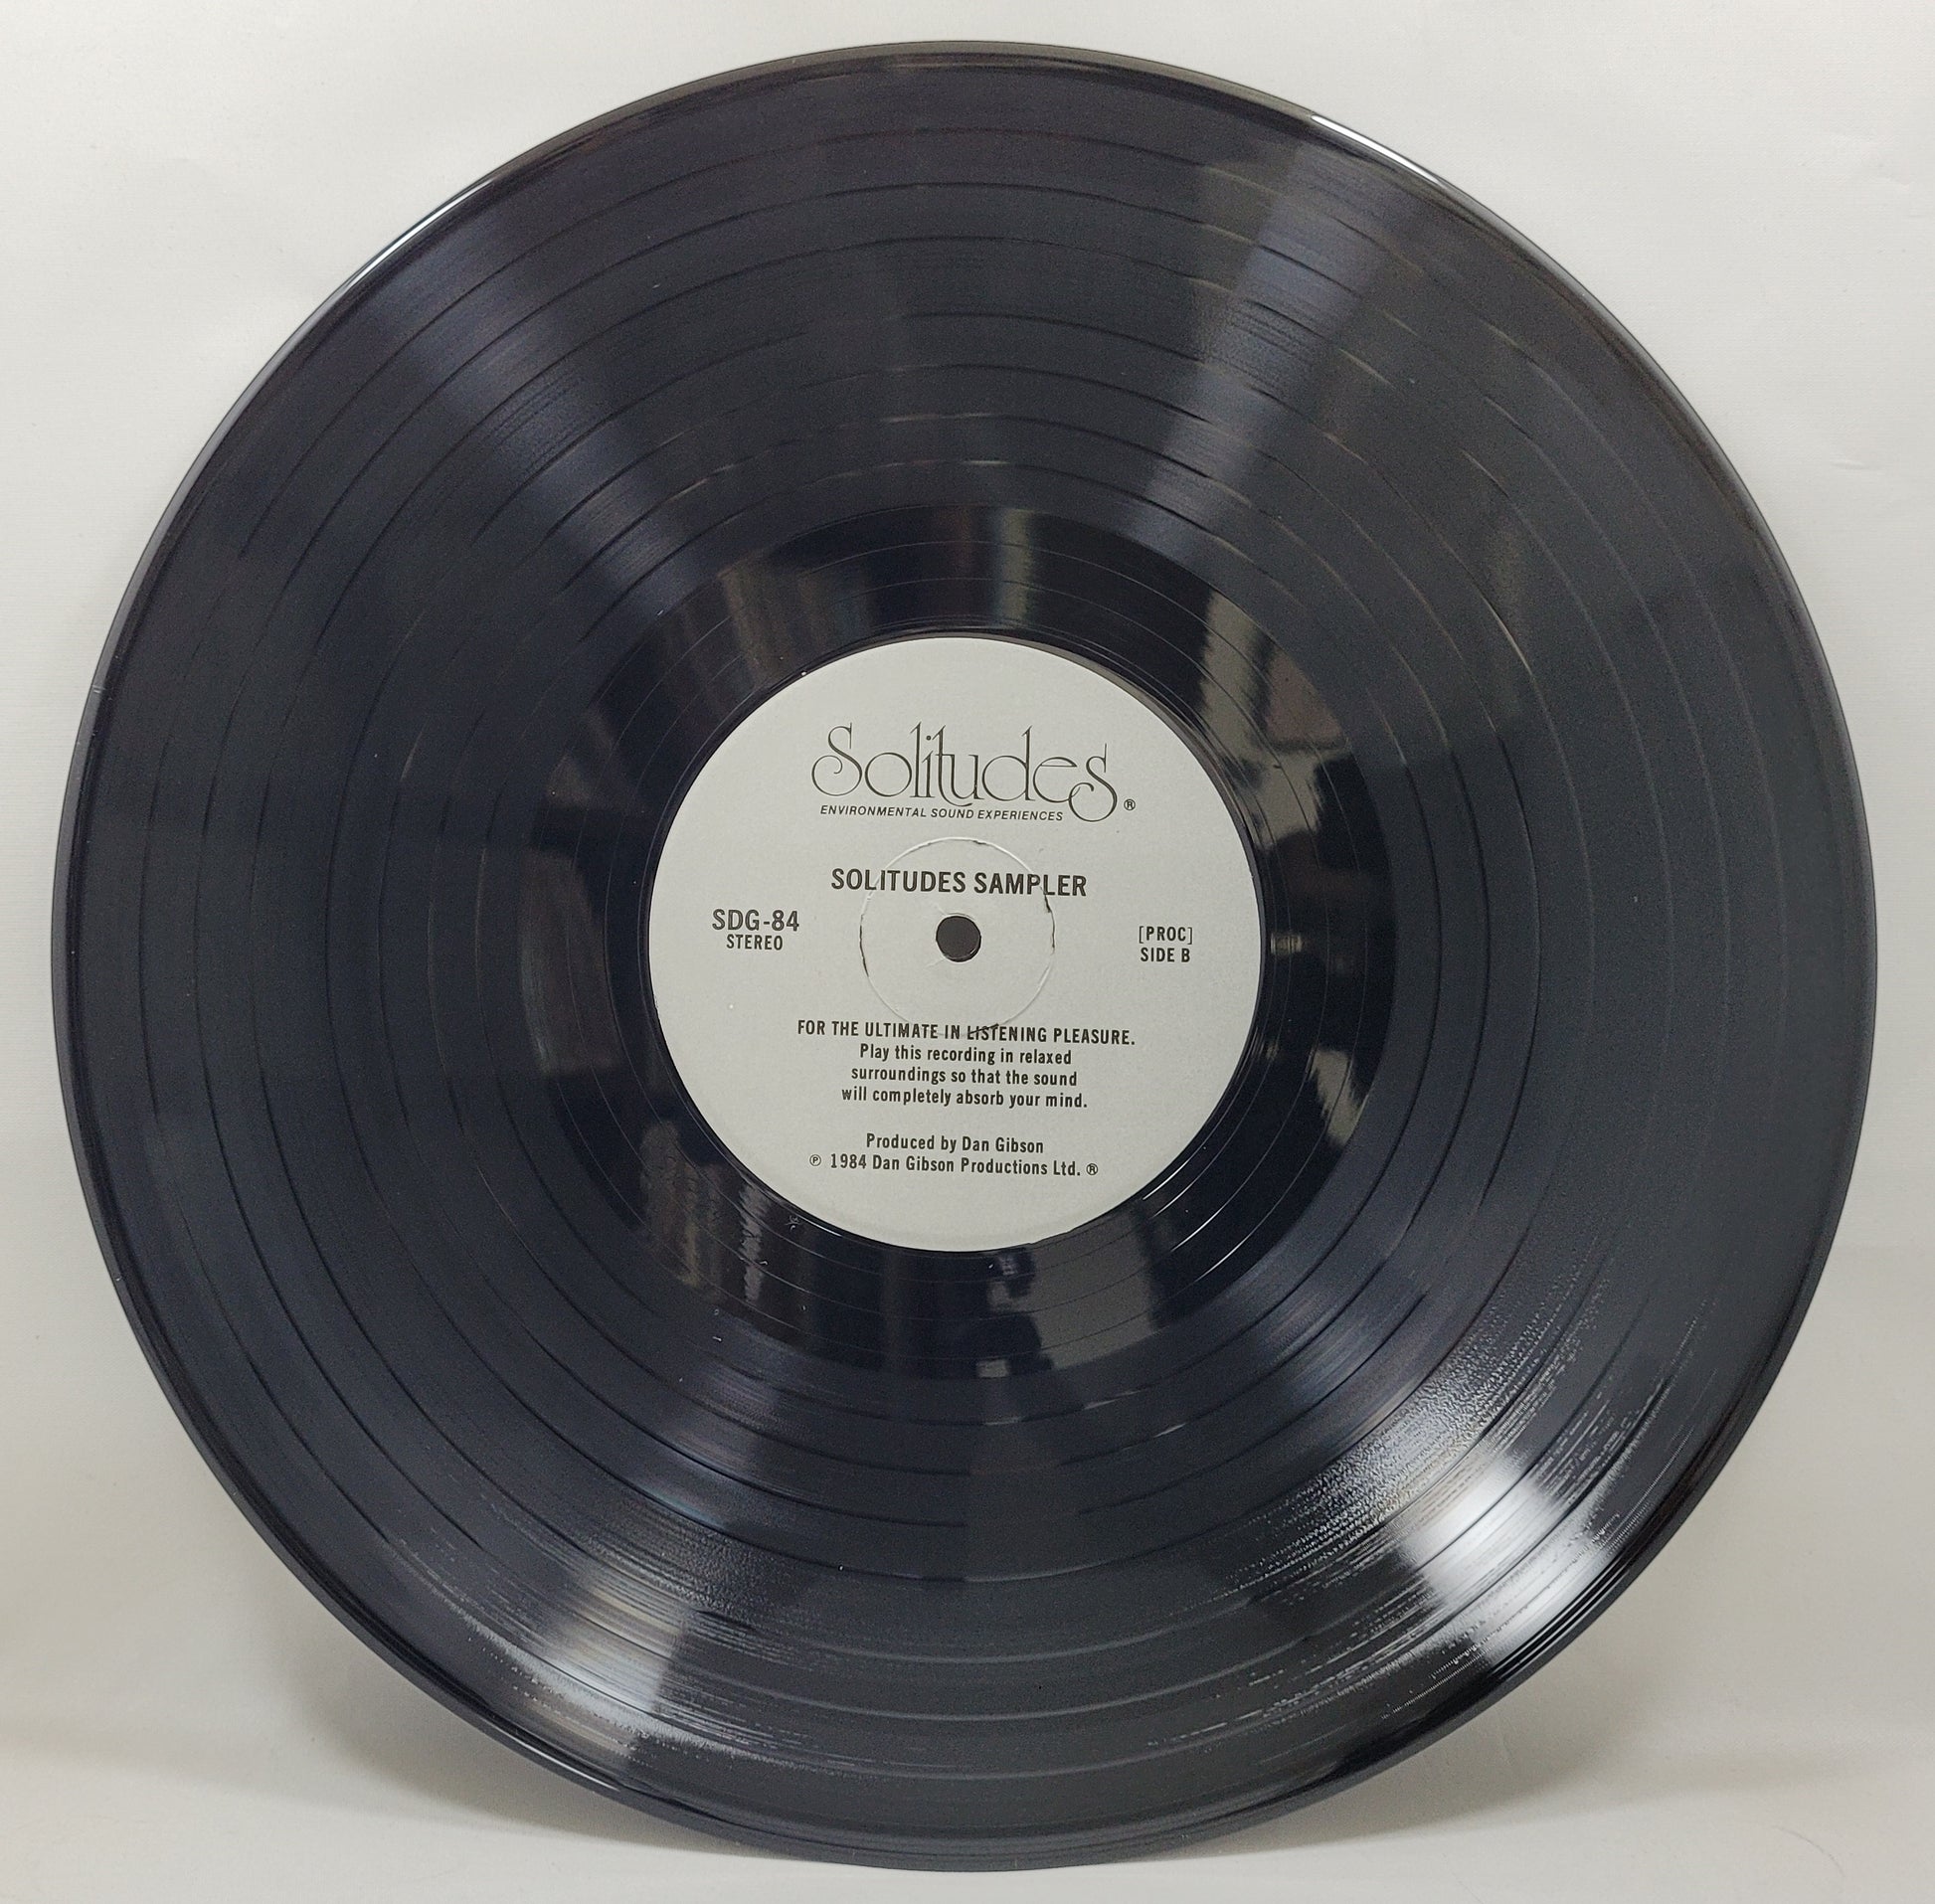 Dan Gibson - Solitudes Sampler [1984 Sampler] [Used Vinyl Record LP]